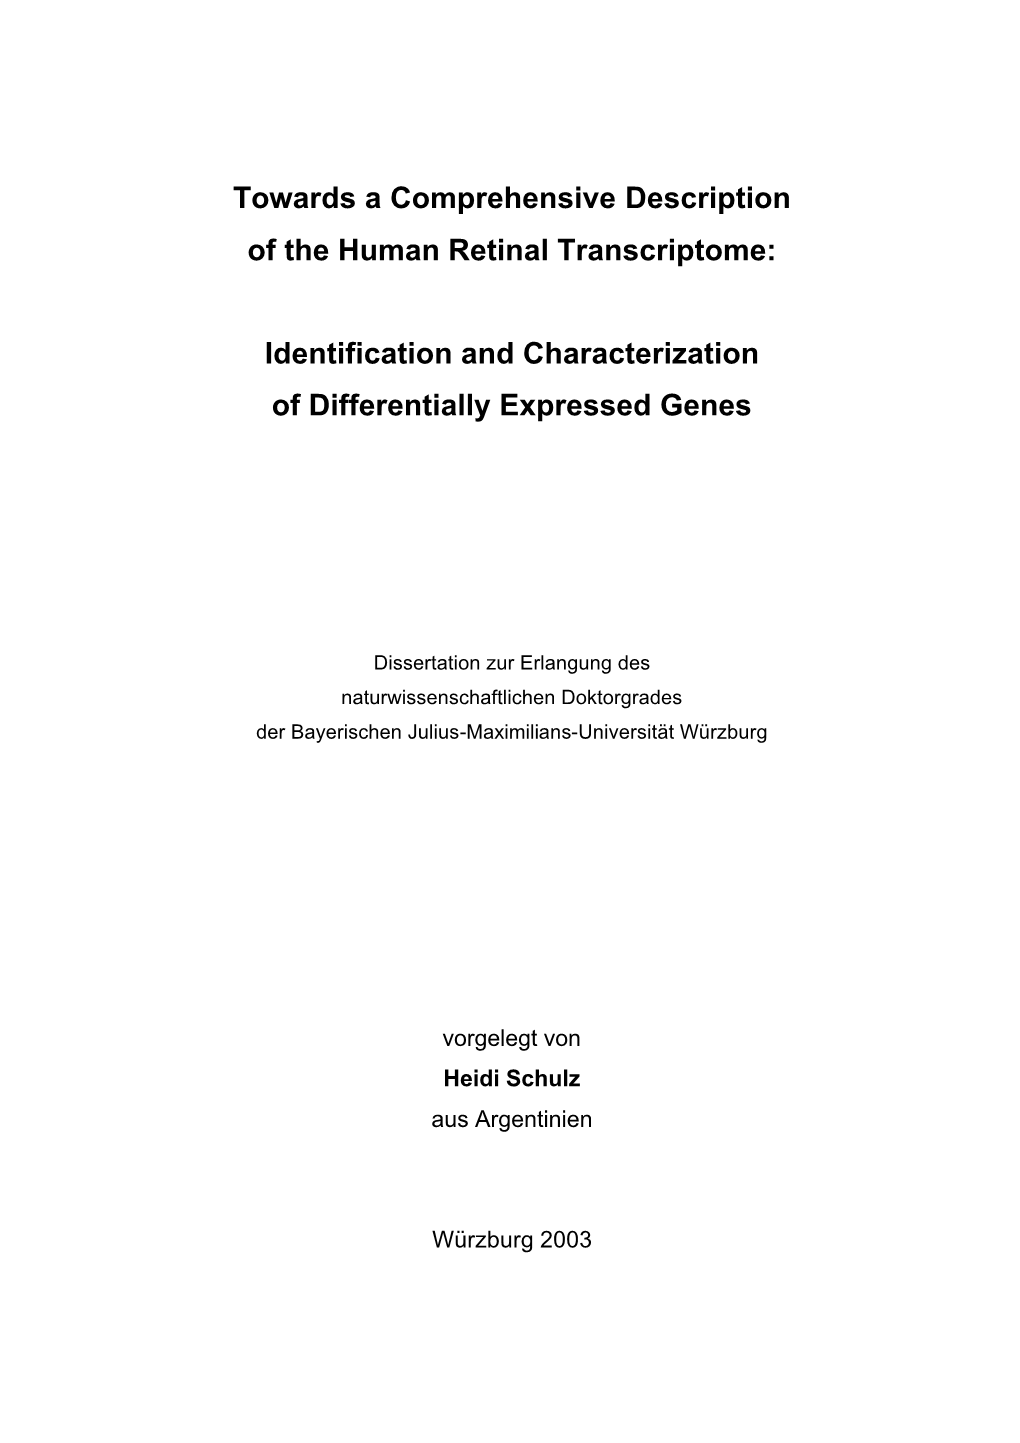 Towards a Comprehensive Description of the Human Retinal Transcriptome